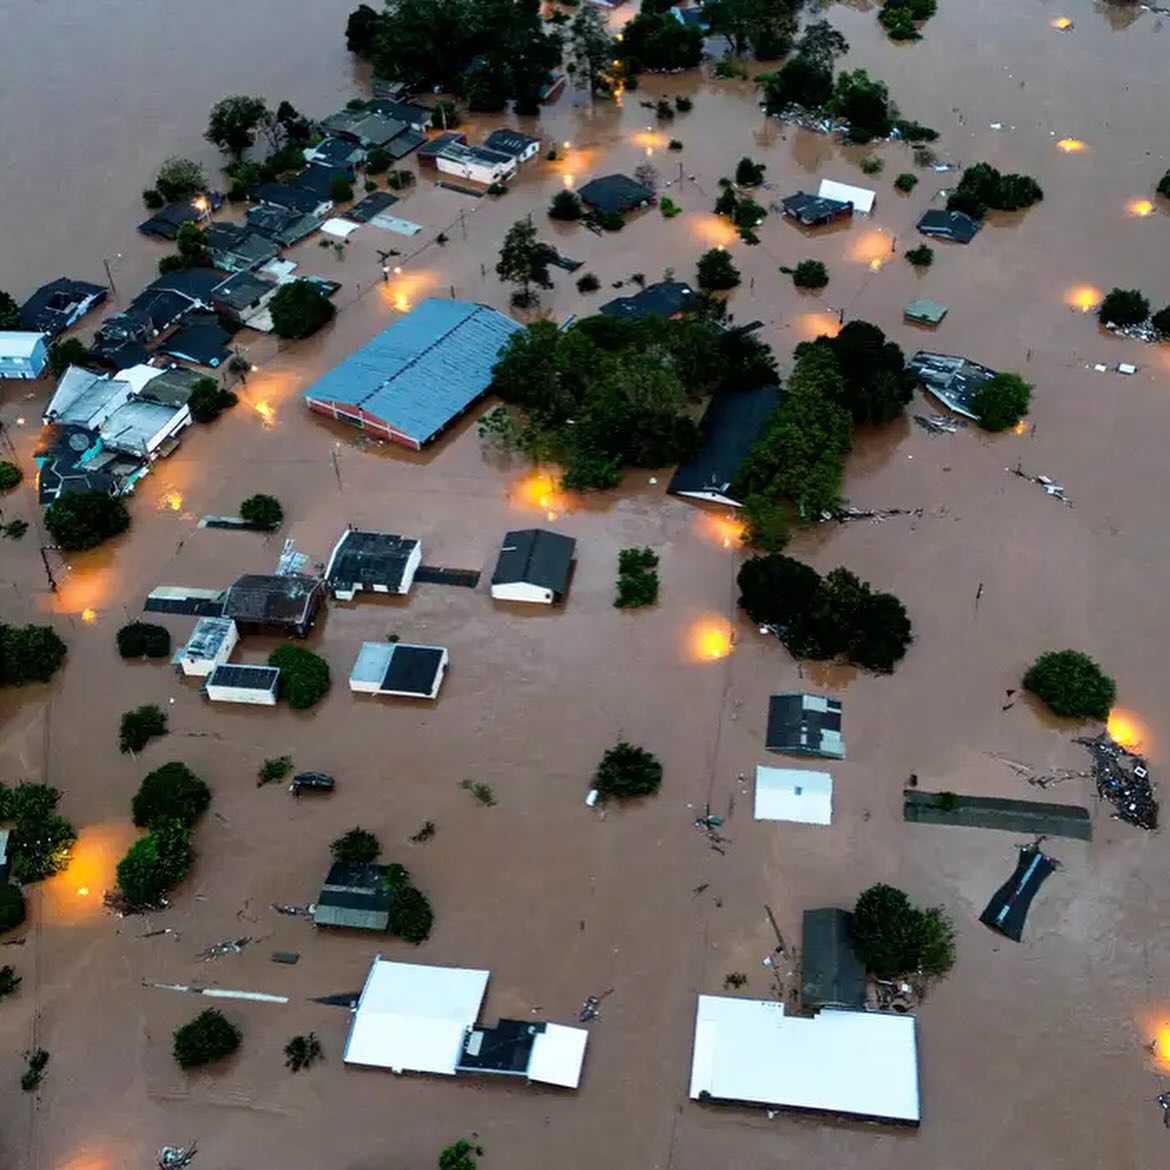 alluvione brasile